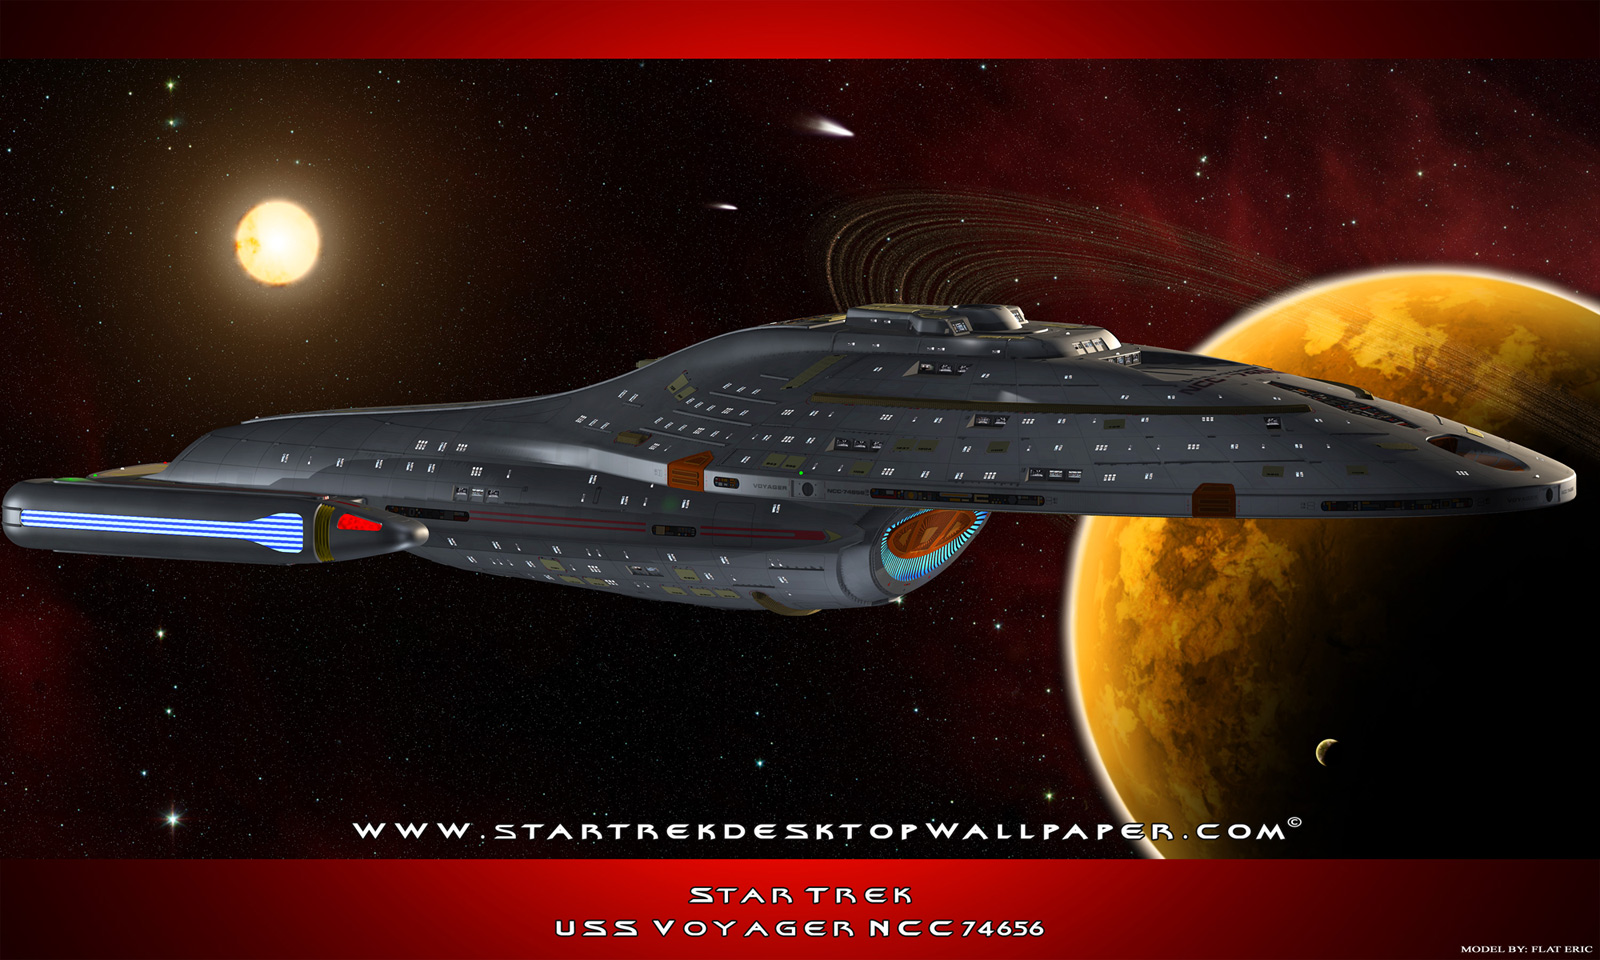 - Star Trek USS Voyager NCC74656 - free Star Trek computer desktop wallpaper, pictures, images.